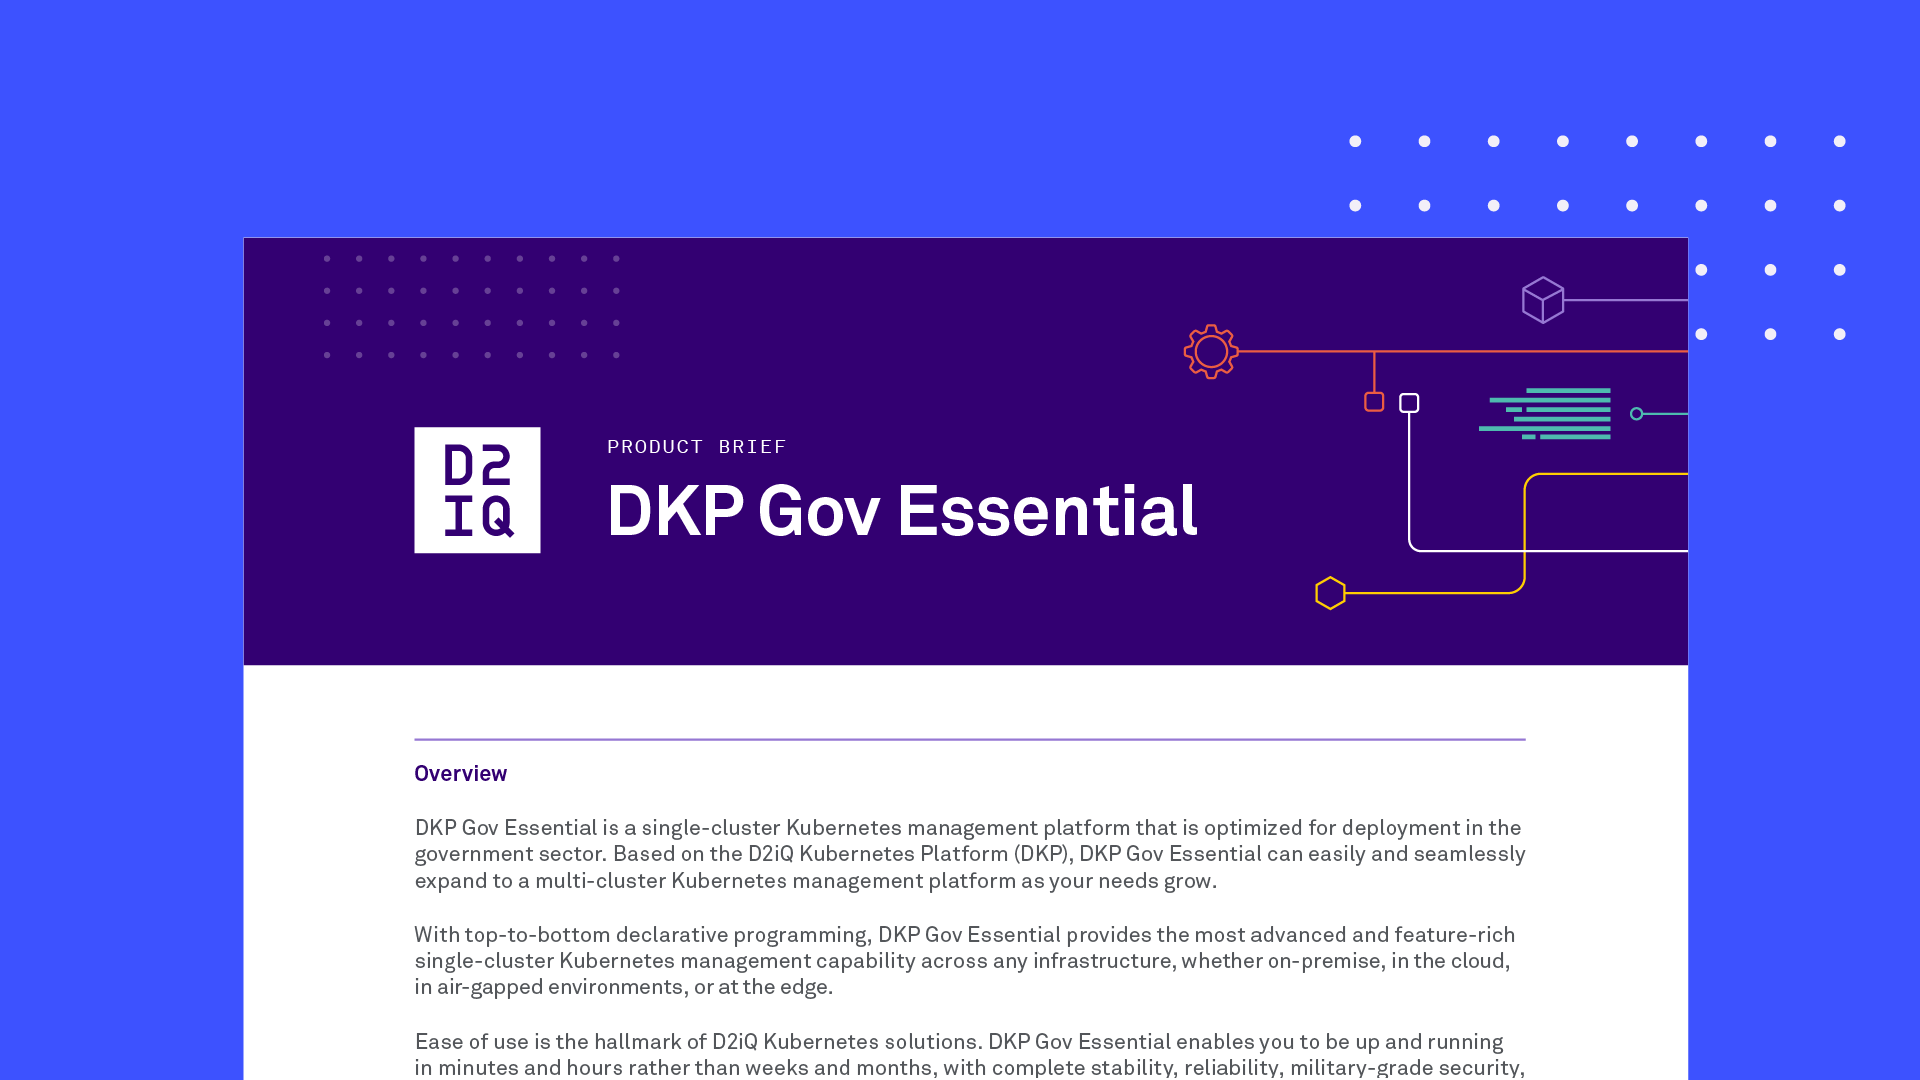 DKP Gov Essential